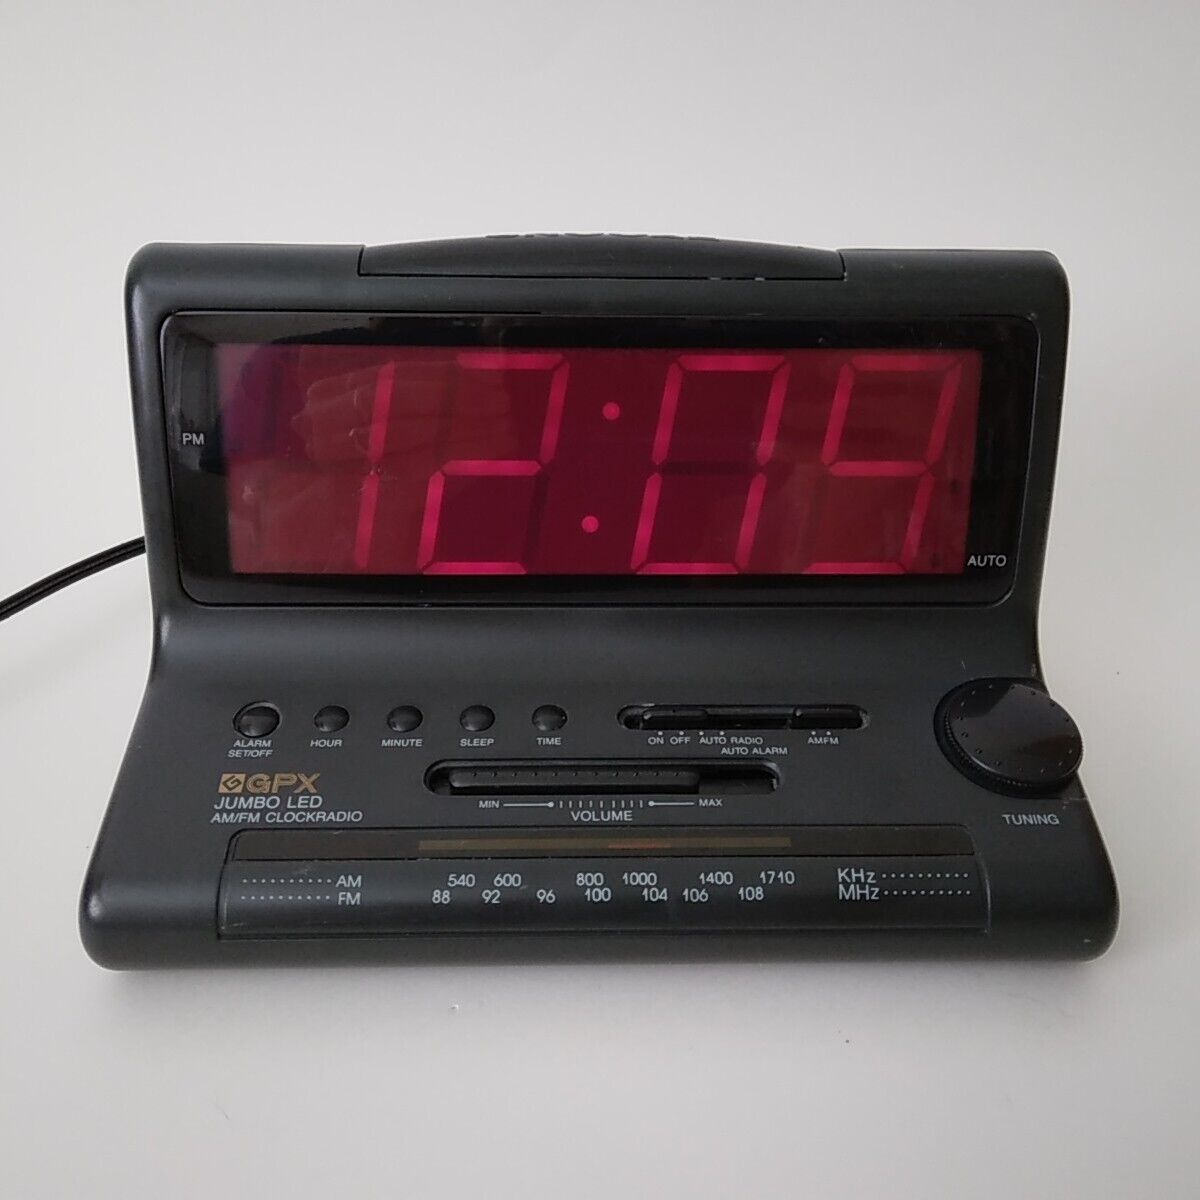 GPX Radio Alarm Clock Model: D518-Jumbo Red LED Dimmer-Black-Tested/Works